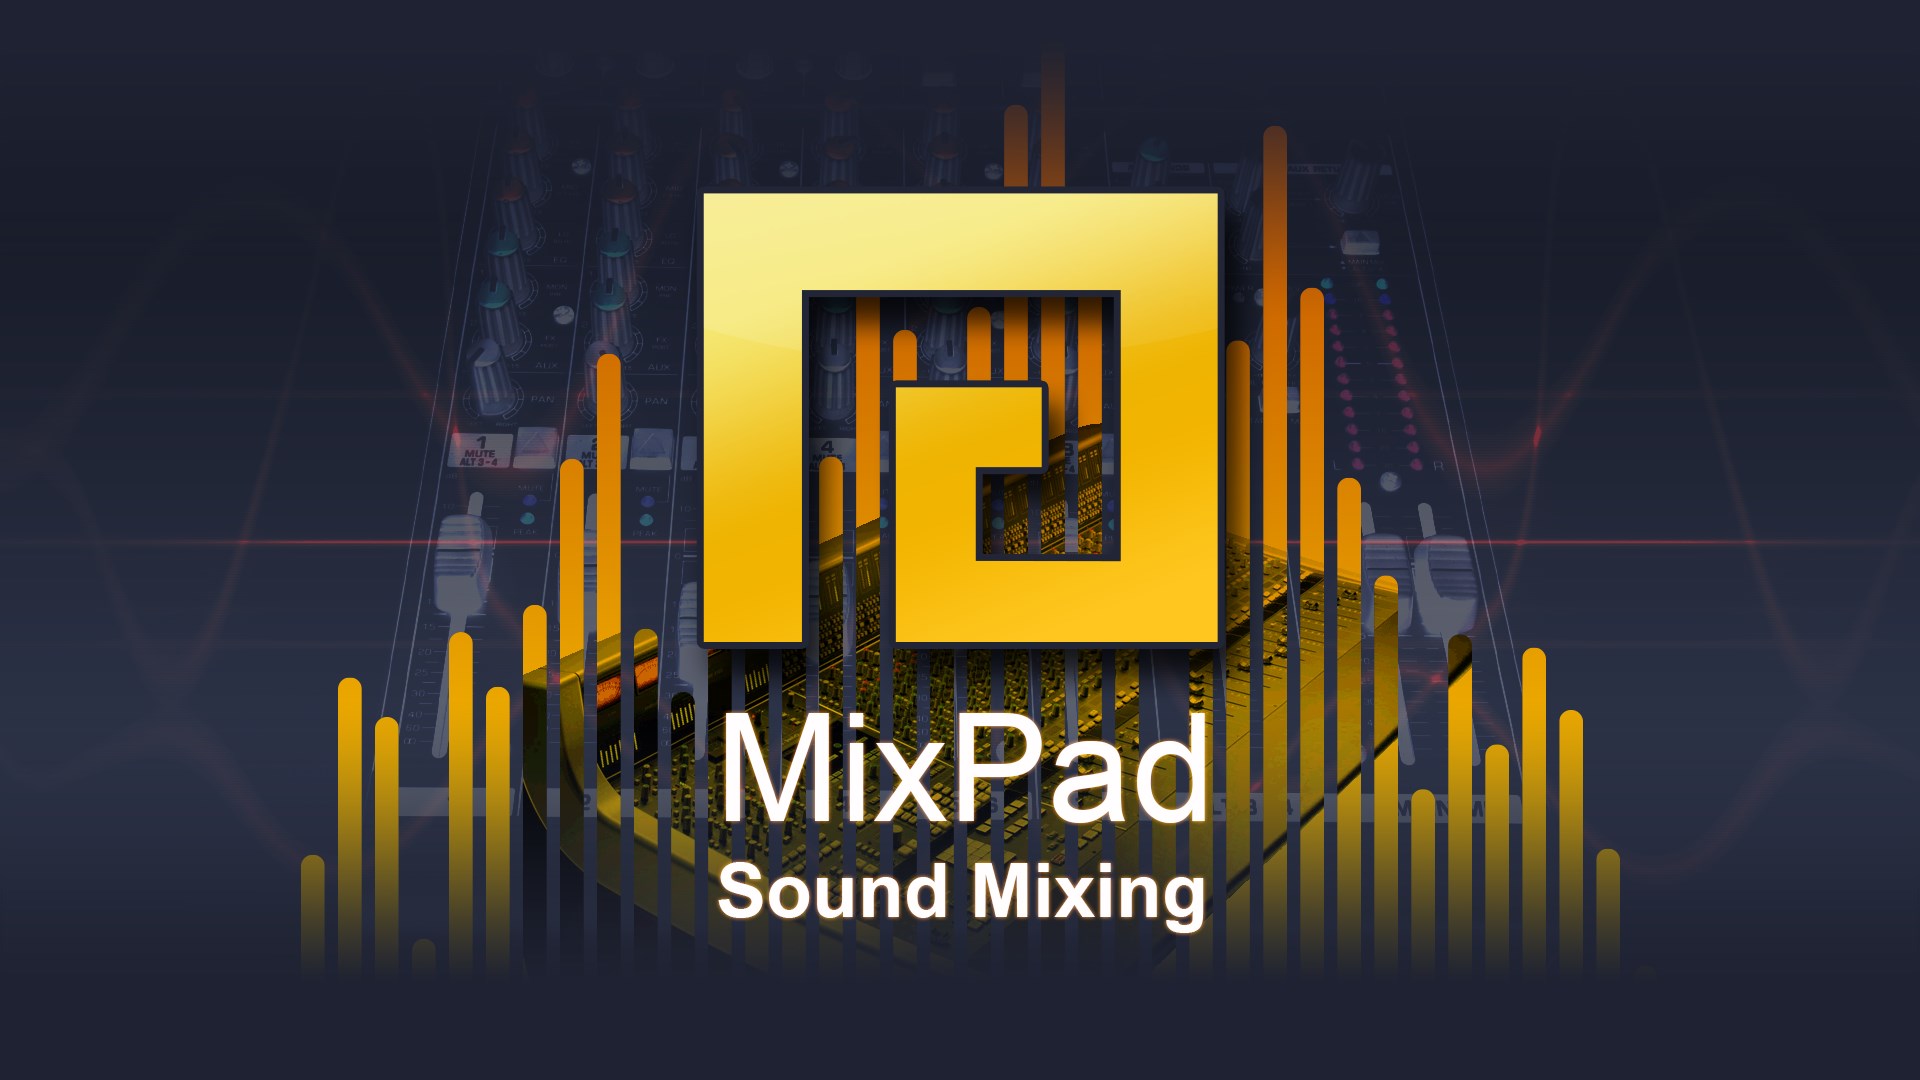 NCH: MixPad Multitrack Recording Key